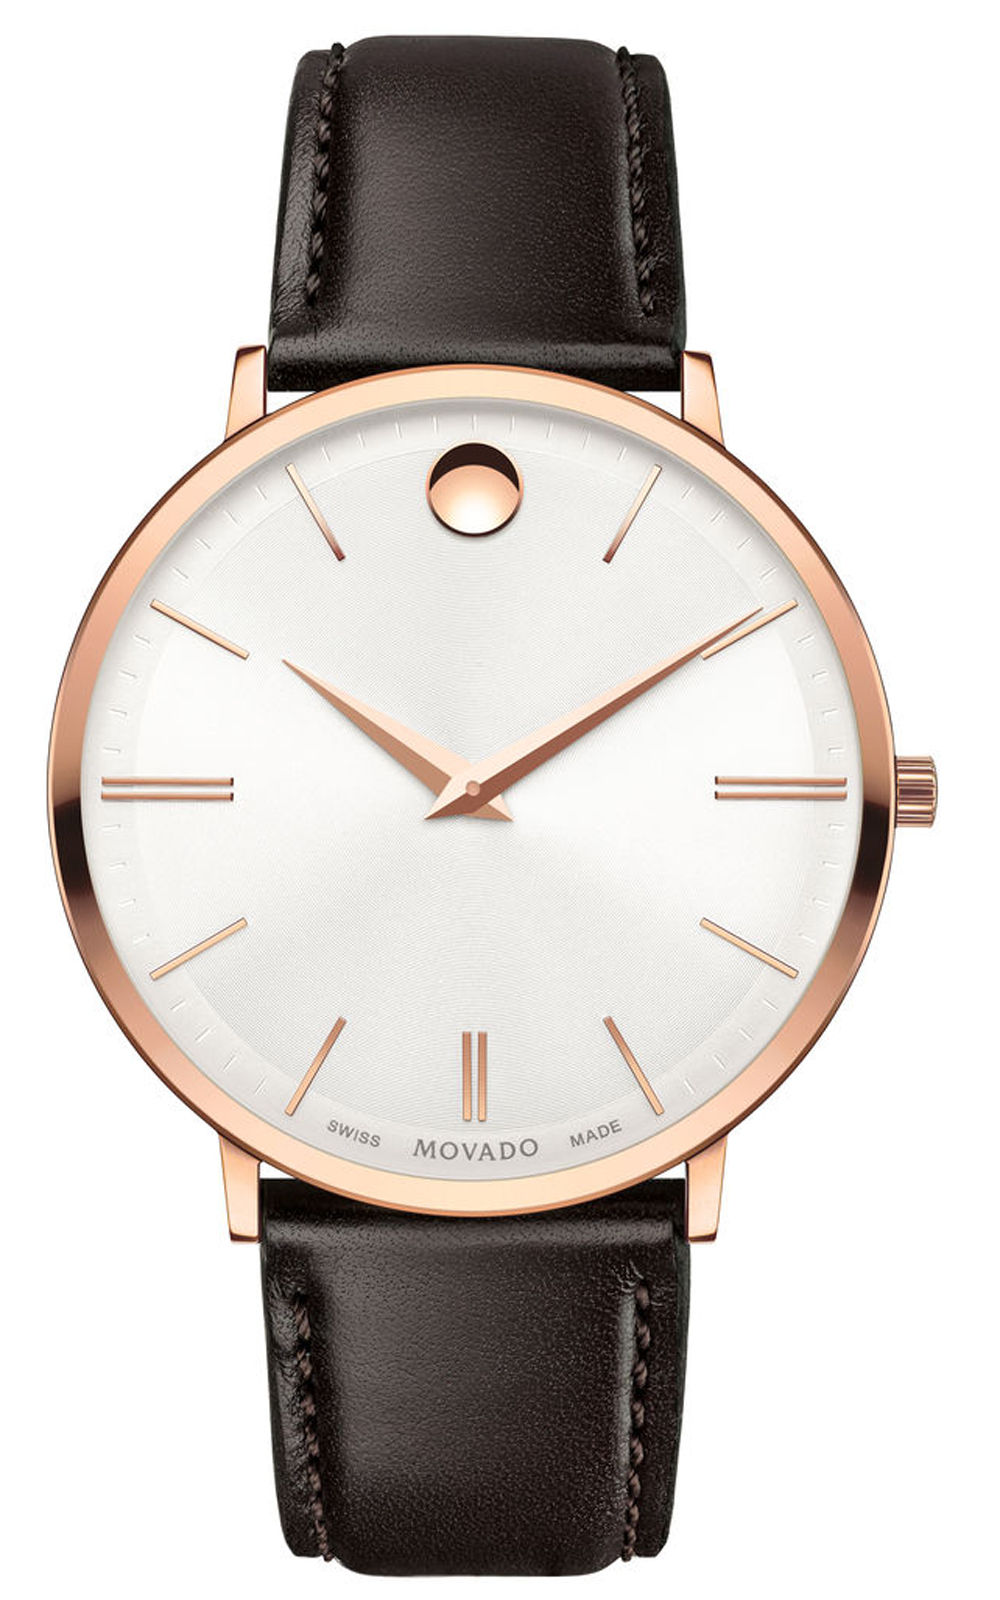 Đồng hồ Movado Ultra Slim Men's Watch 0607089, 40mm